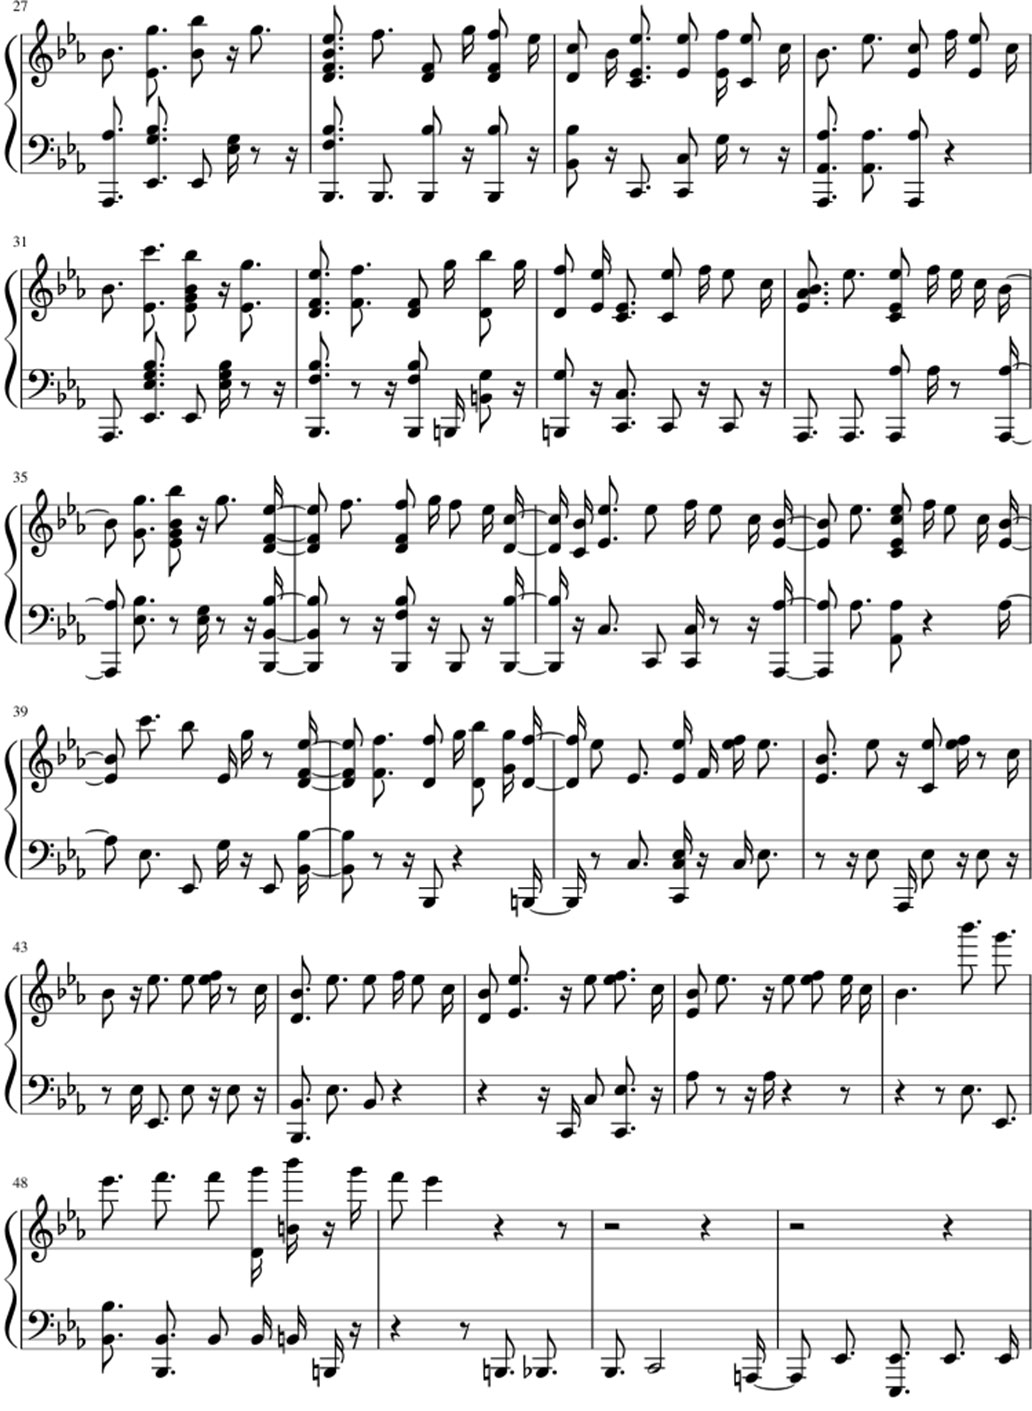 Windfall sheet music notes 2